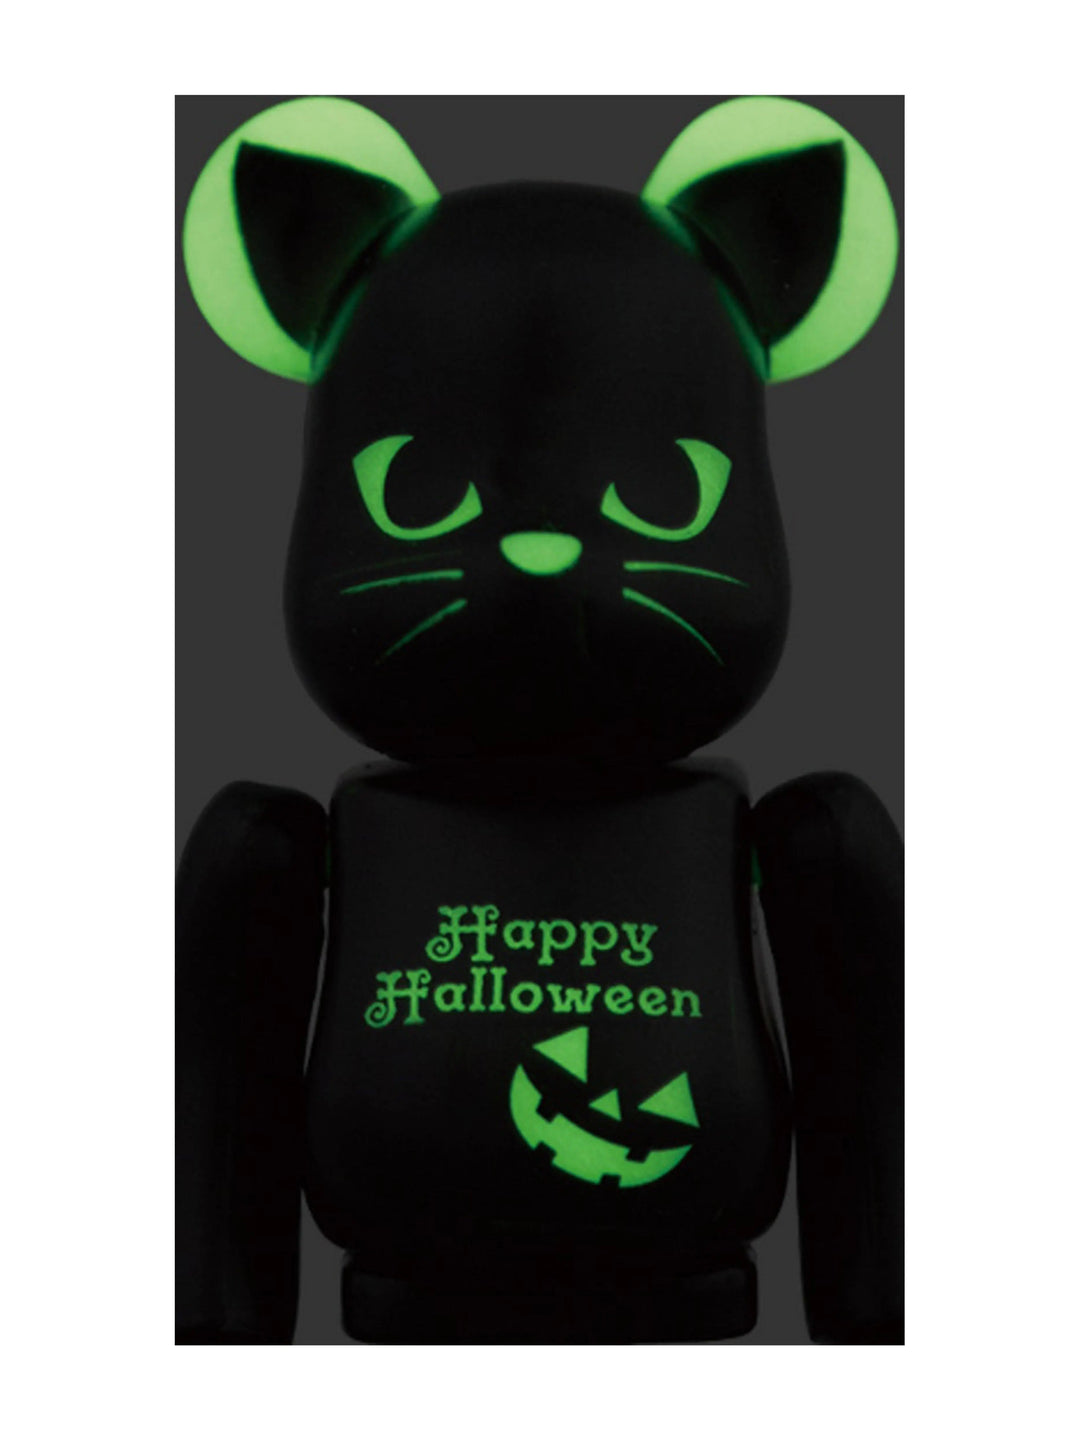 Medicom Toy Be@arbrick 2016 Halloween 400% Black/Green Prior